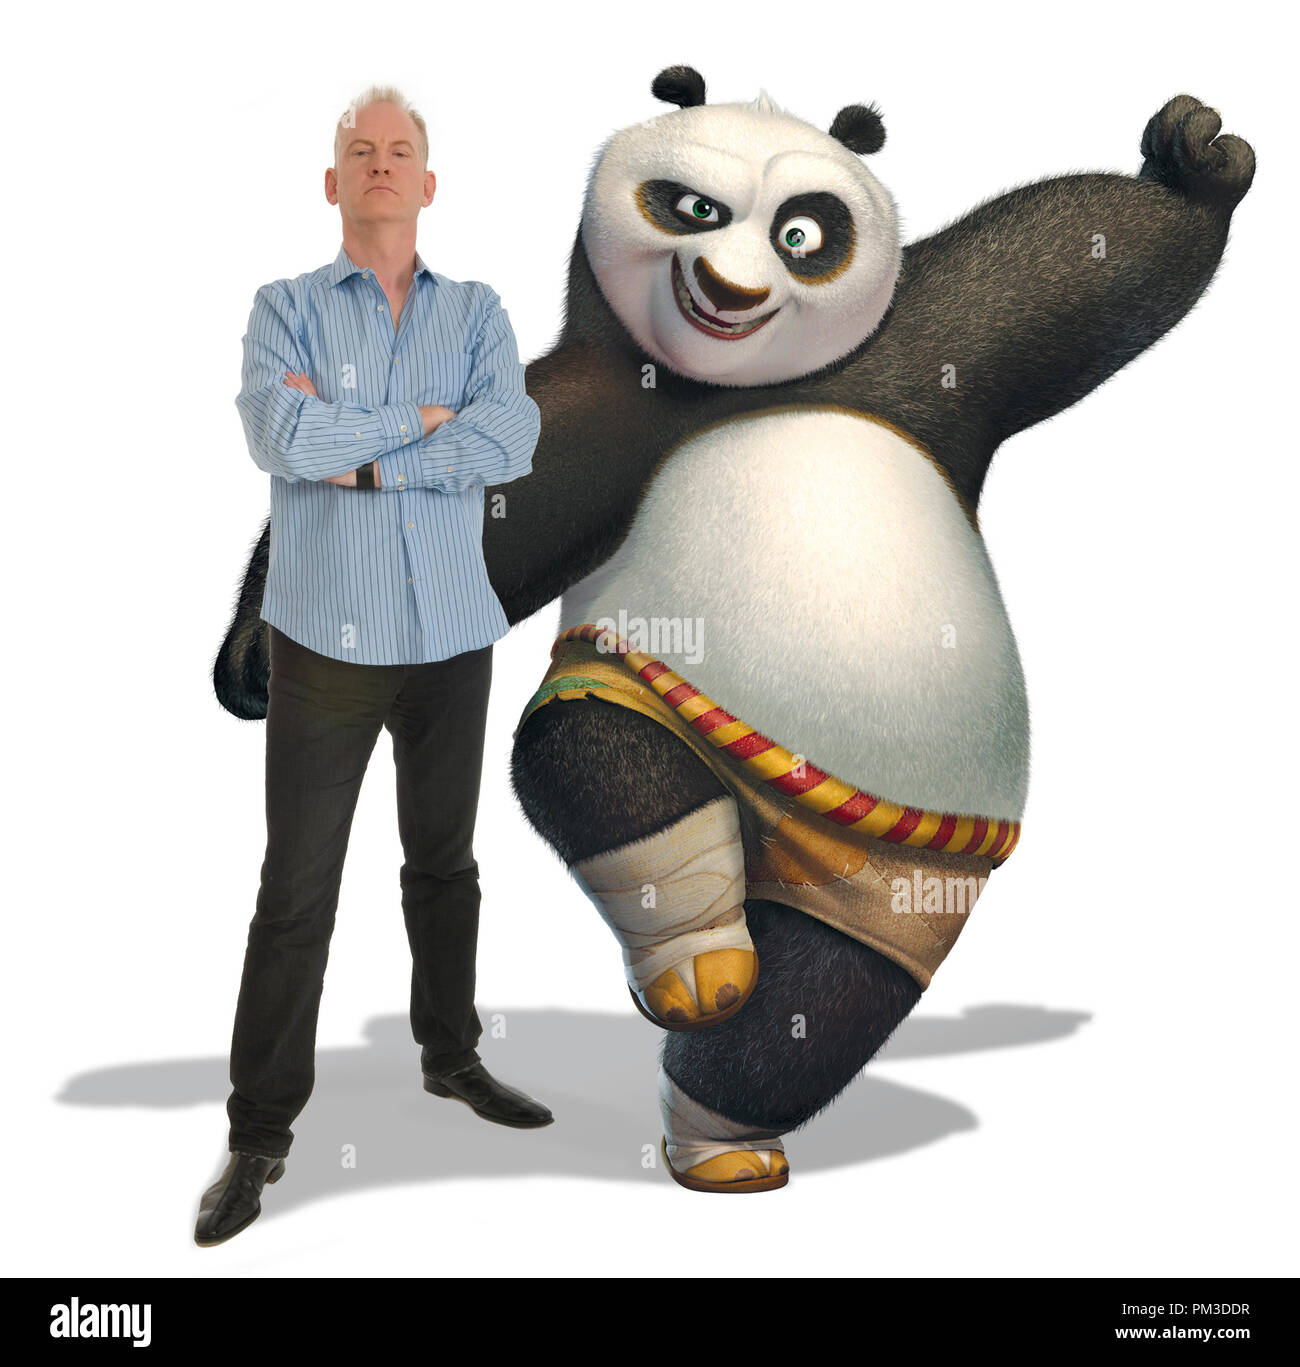 John stevenson kung fu panda hi-res stock photography and images - Alamy